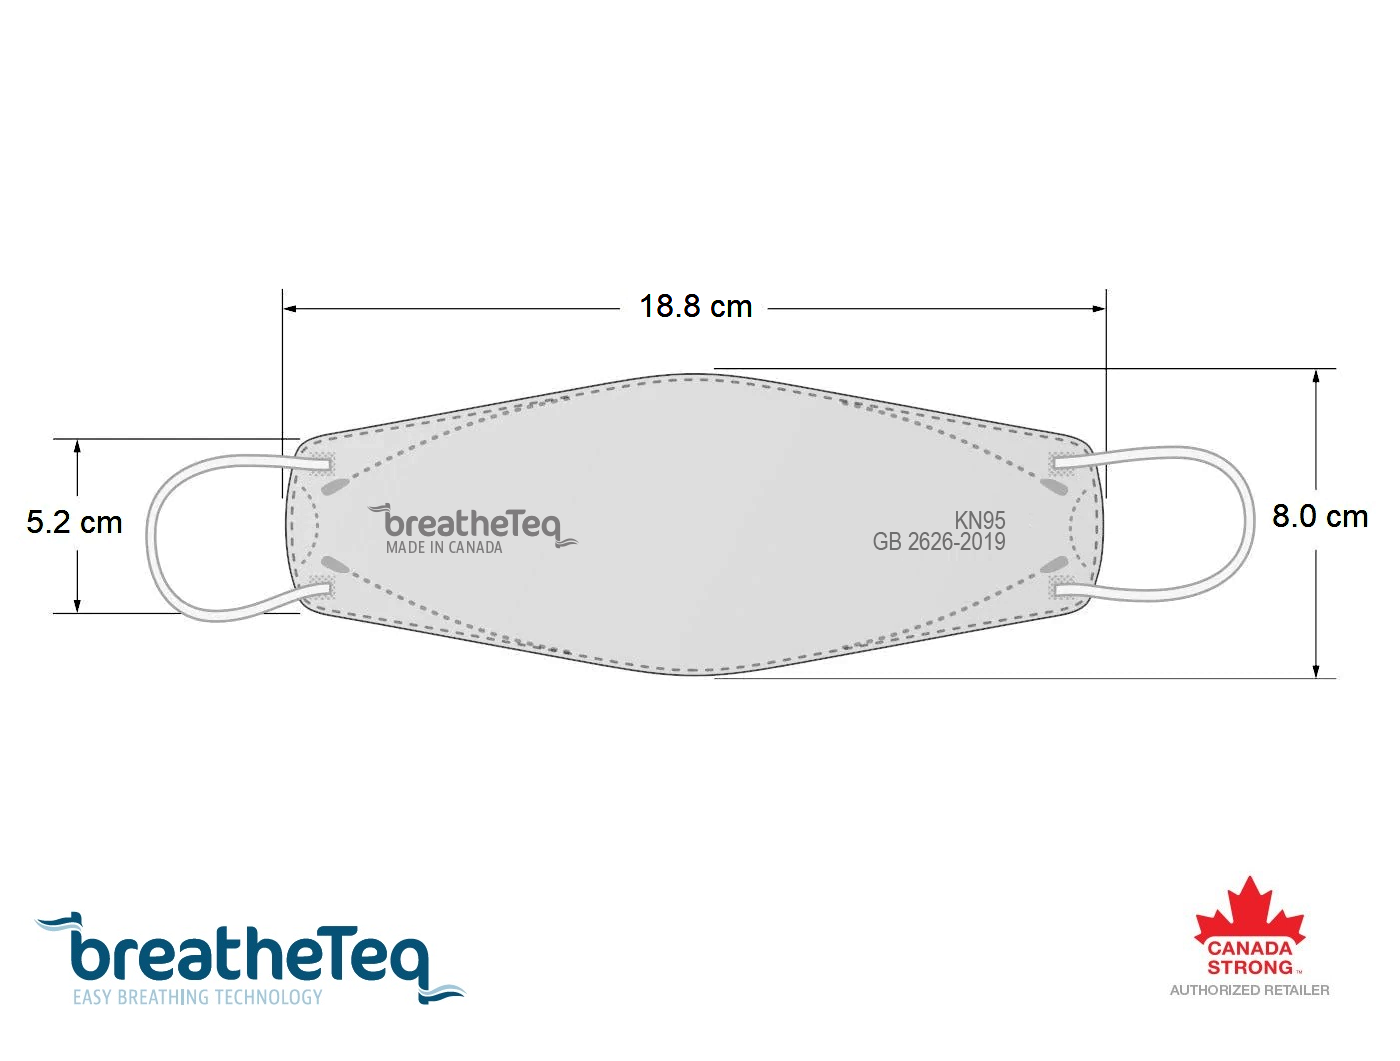 Dimensions of BreatheTeq KN95 small grey size flat fold respirator mask